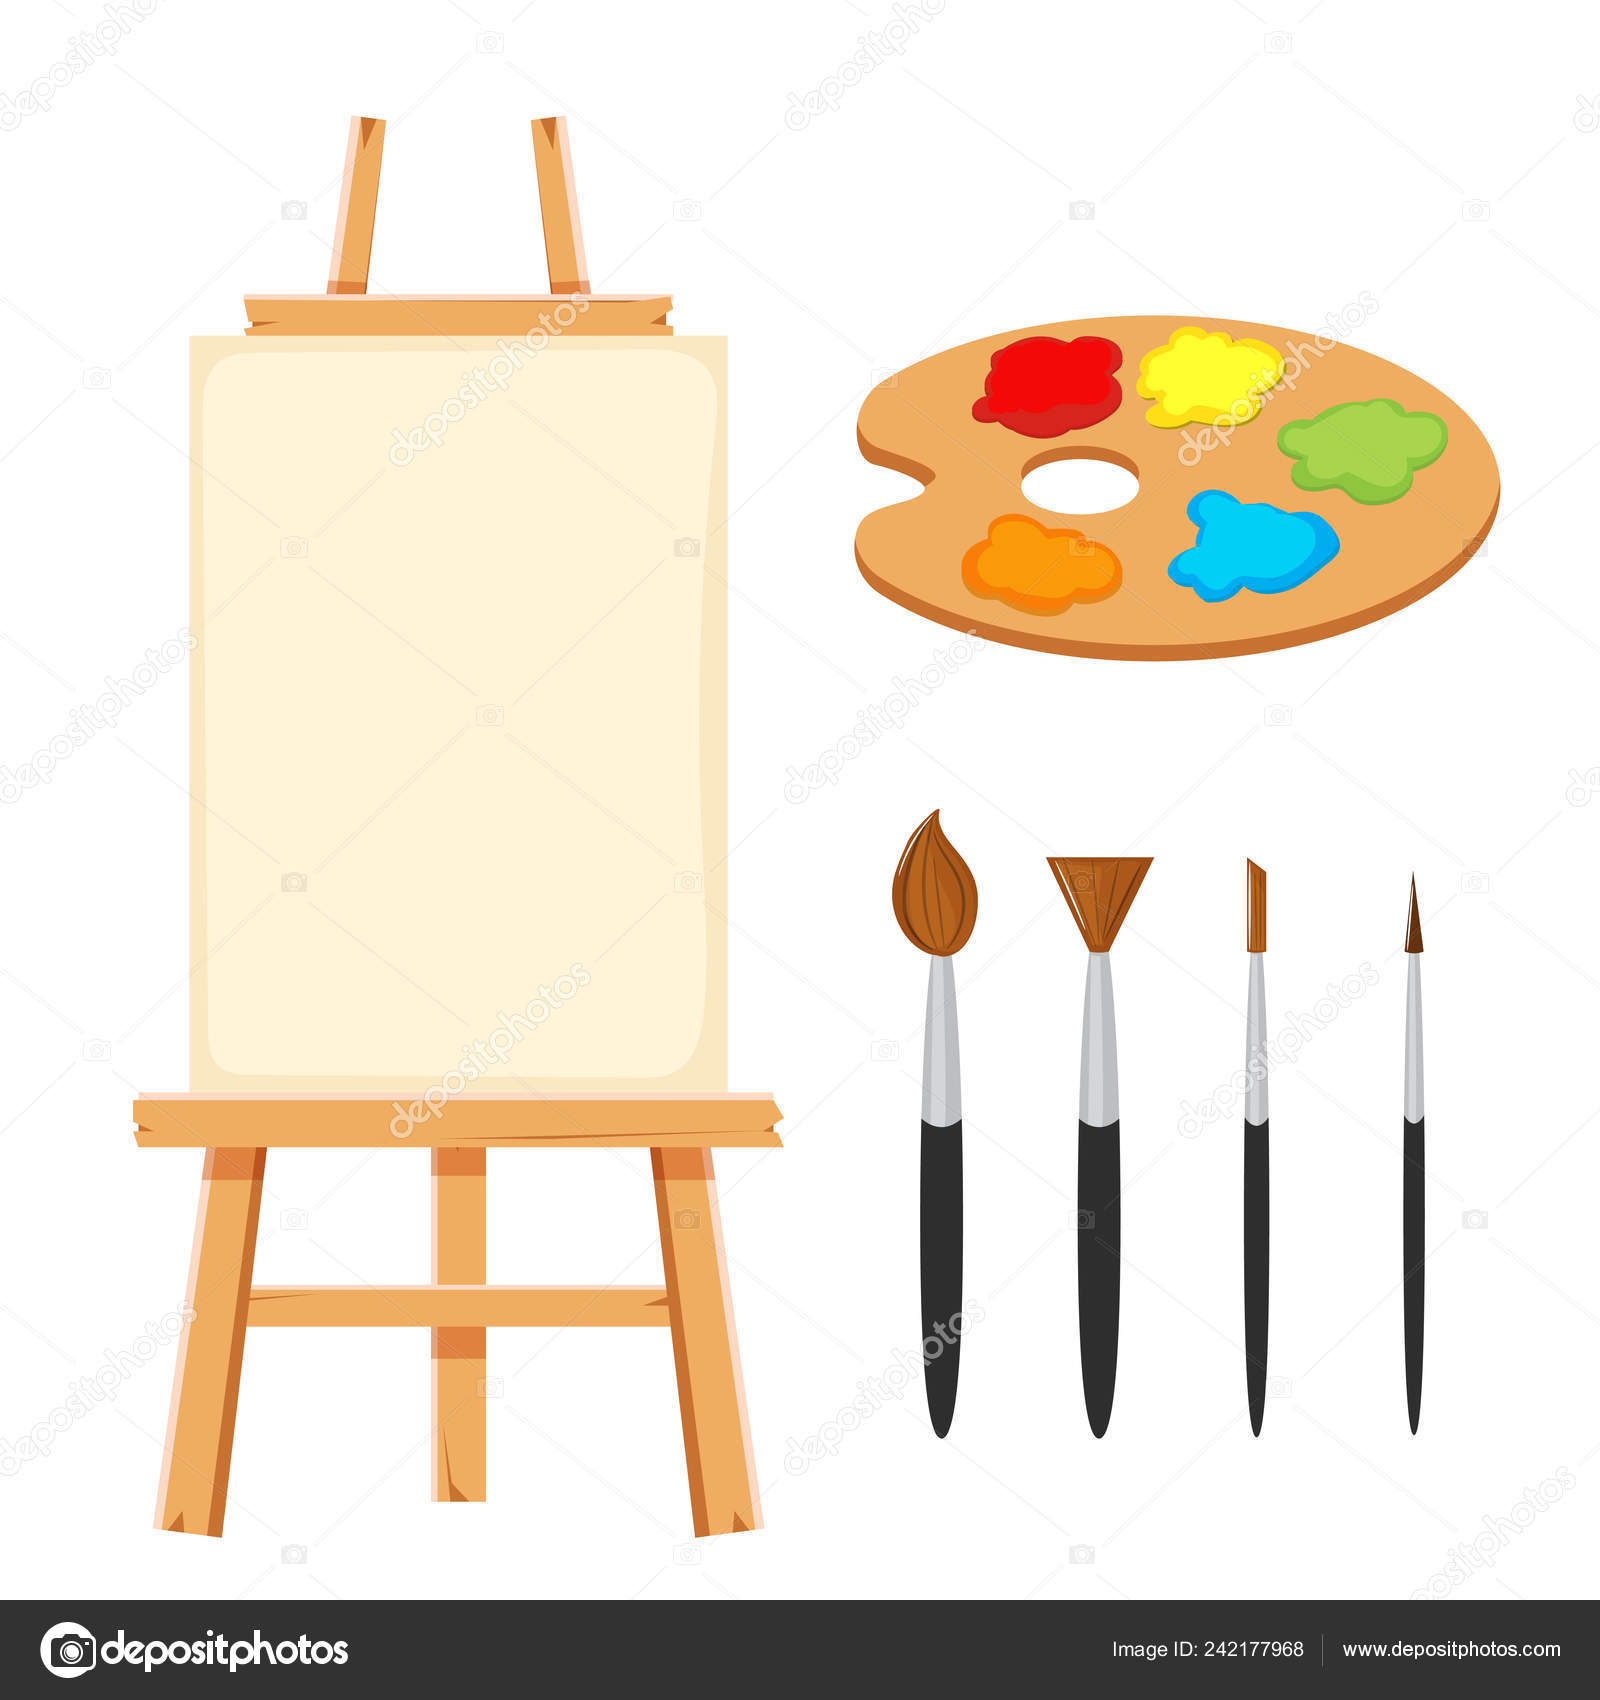 https://st4.depositphotos.com/8065304/24217/v/1600/depositphotos_242177968-stock-illustration-drawing-tool-set-artist-easel.jpg